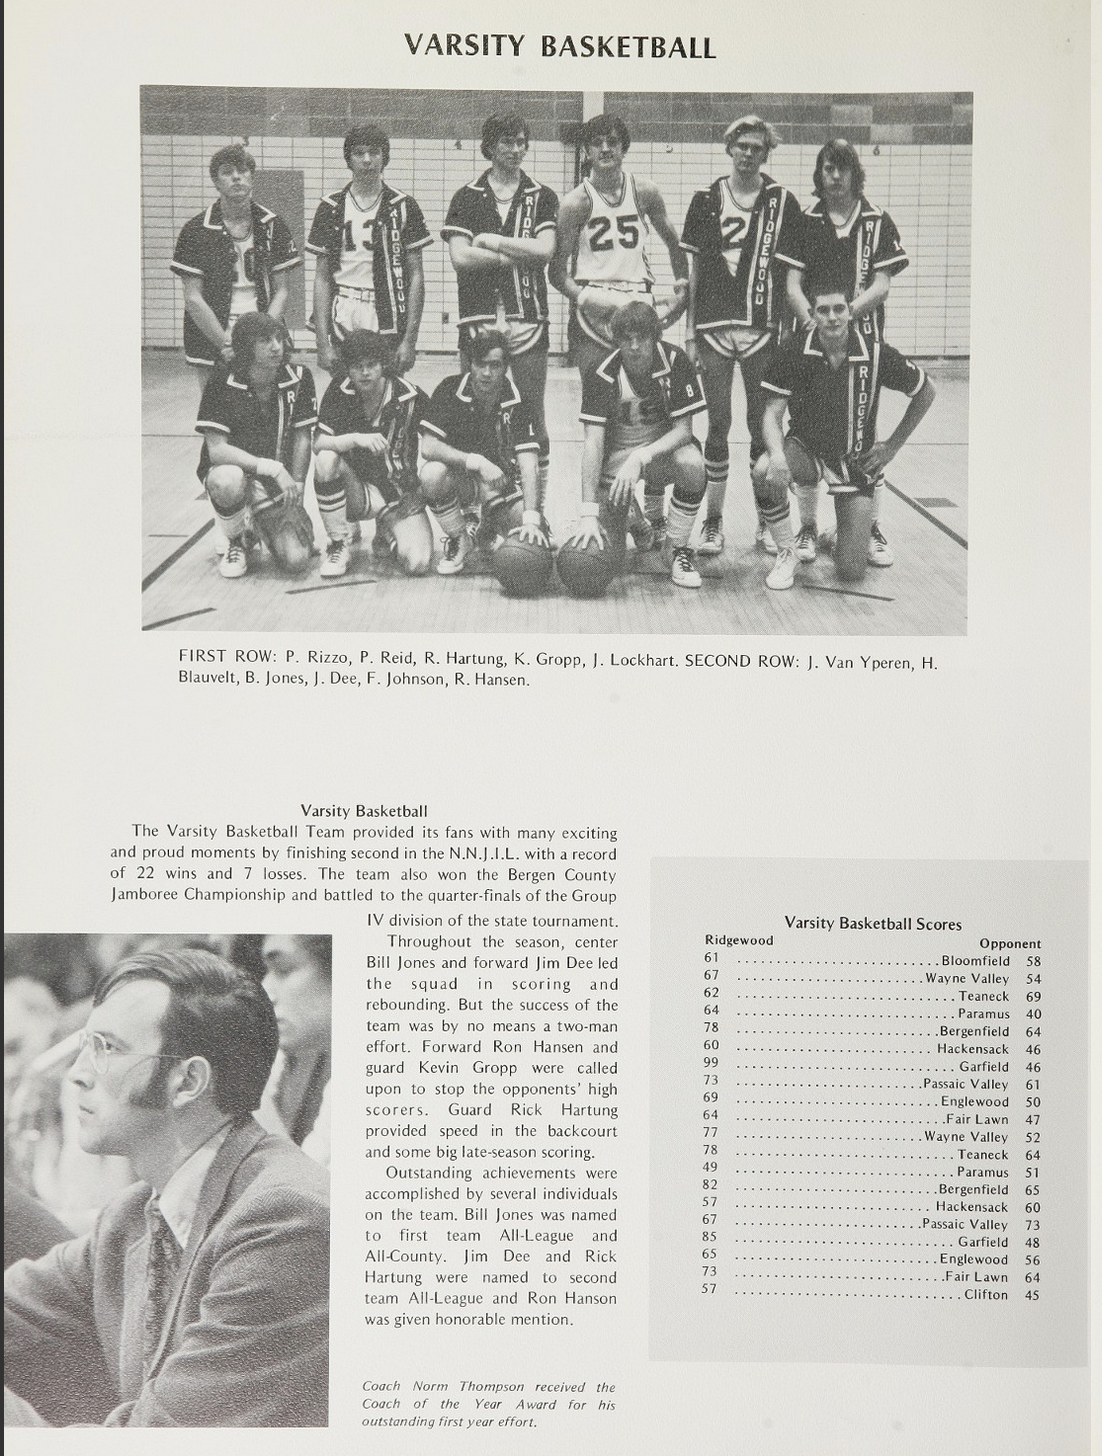 1972 Boys’ Basketball Team